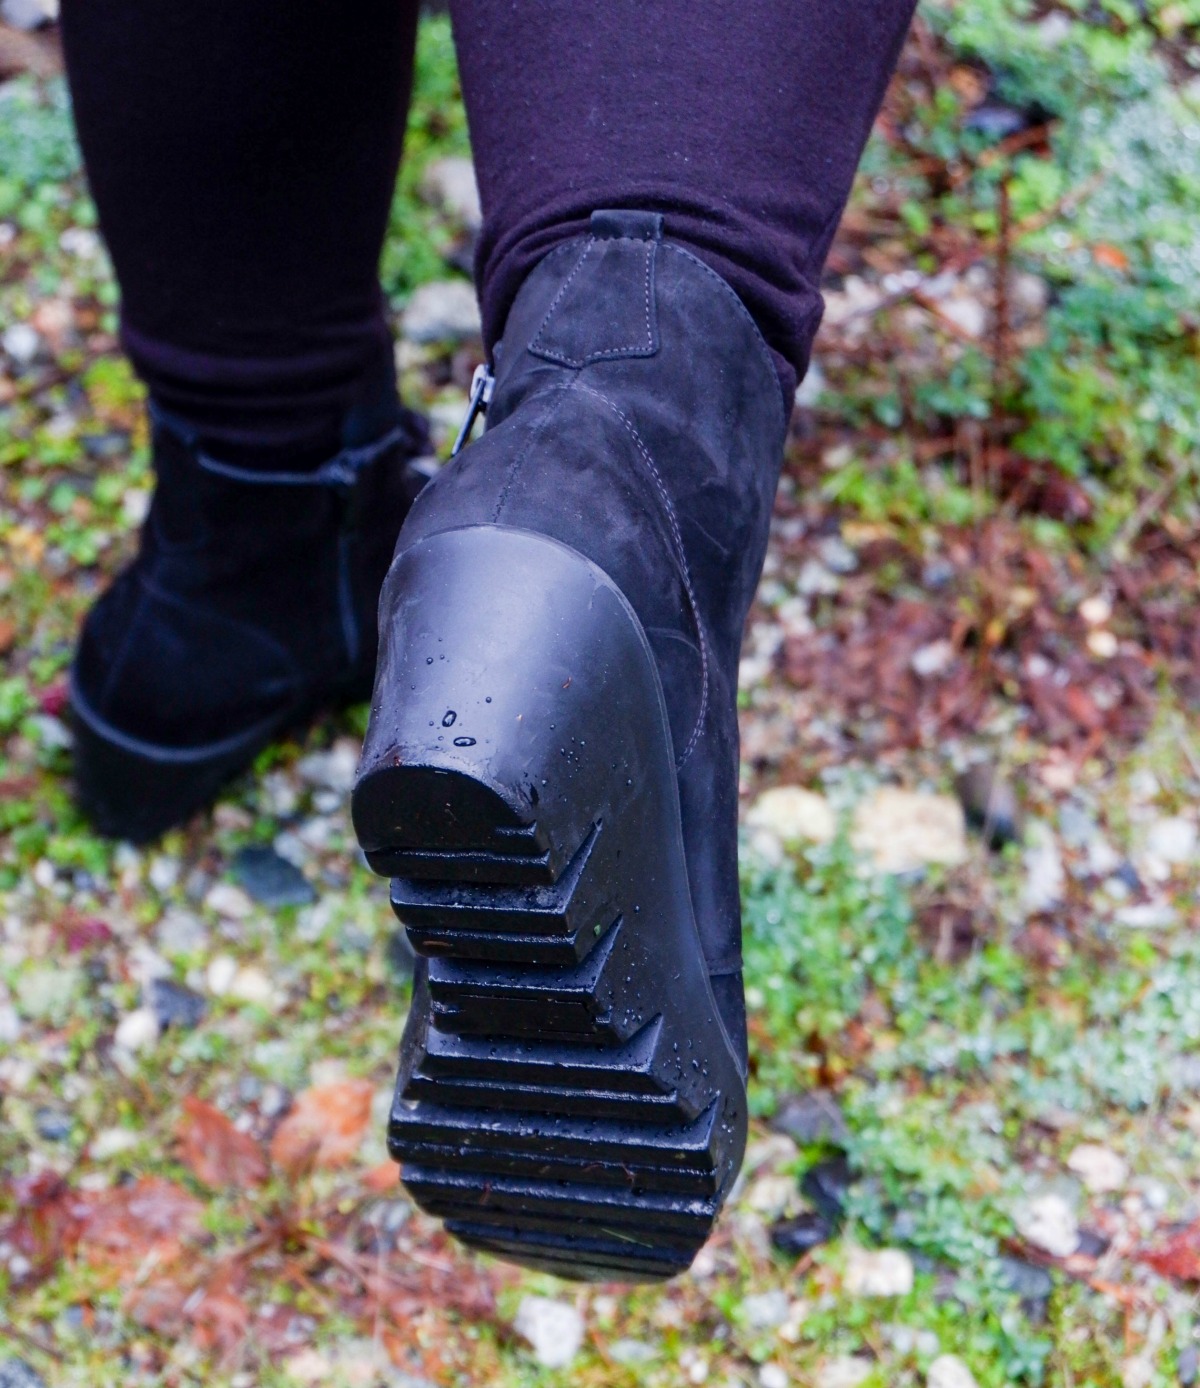 Waldlaufer Women's Effie Wedge Ankle Boot